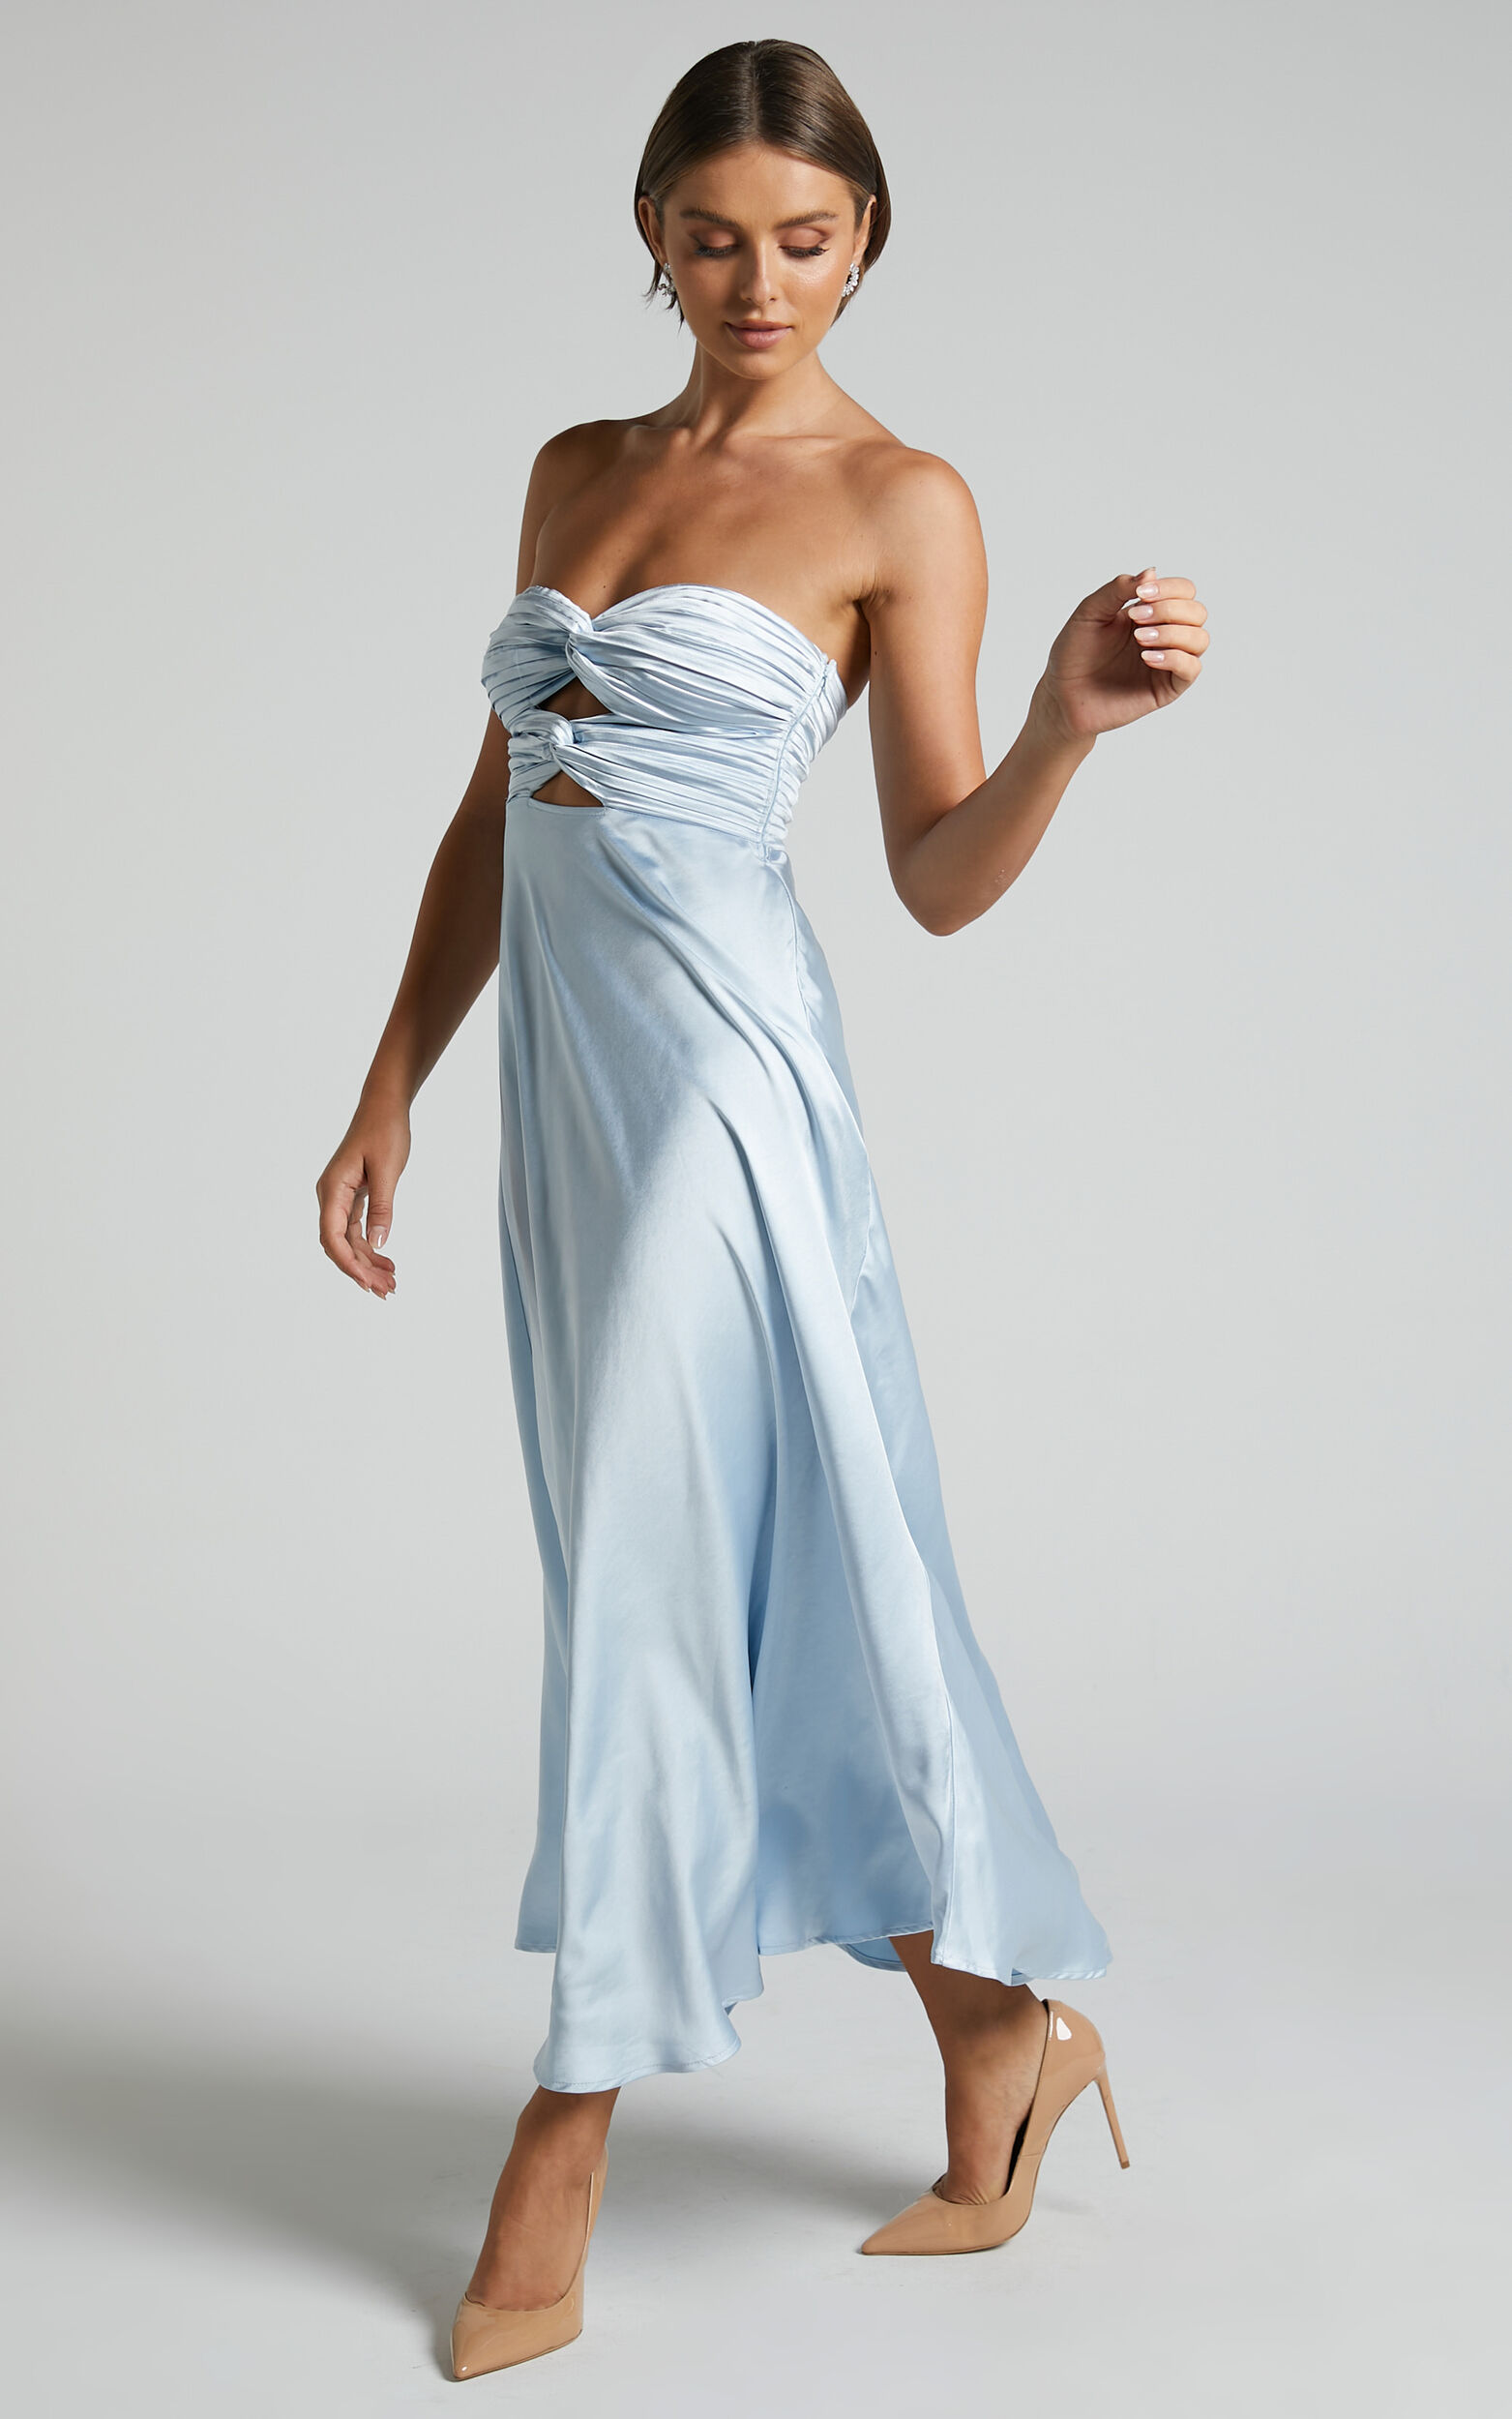 Almaeh Midi Dress - Twist Front Cut Out Strapless Slip Dress in Pale Blue